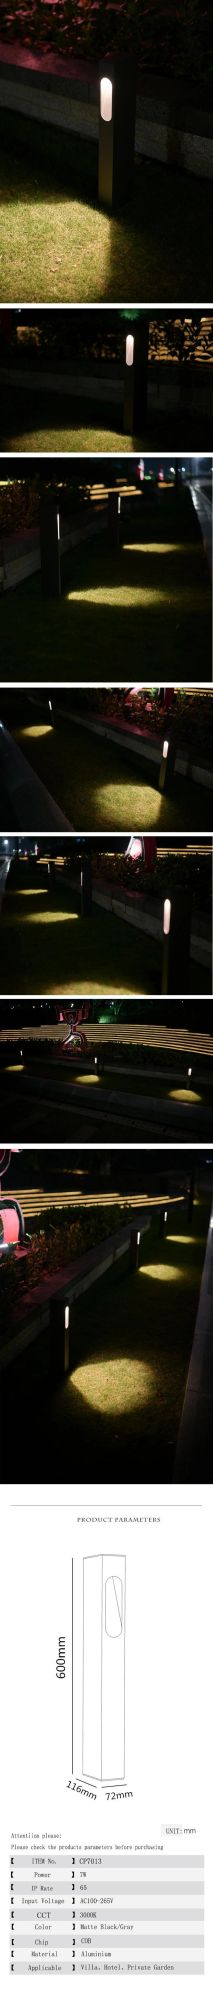 LED Light Outdoor Garden Decorative Lighting